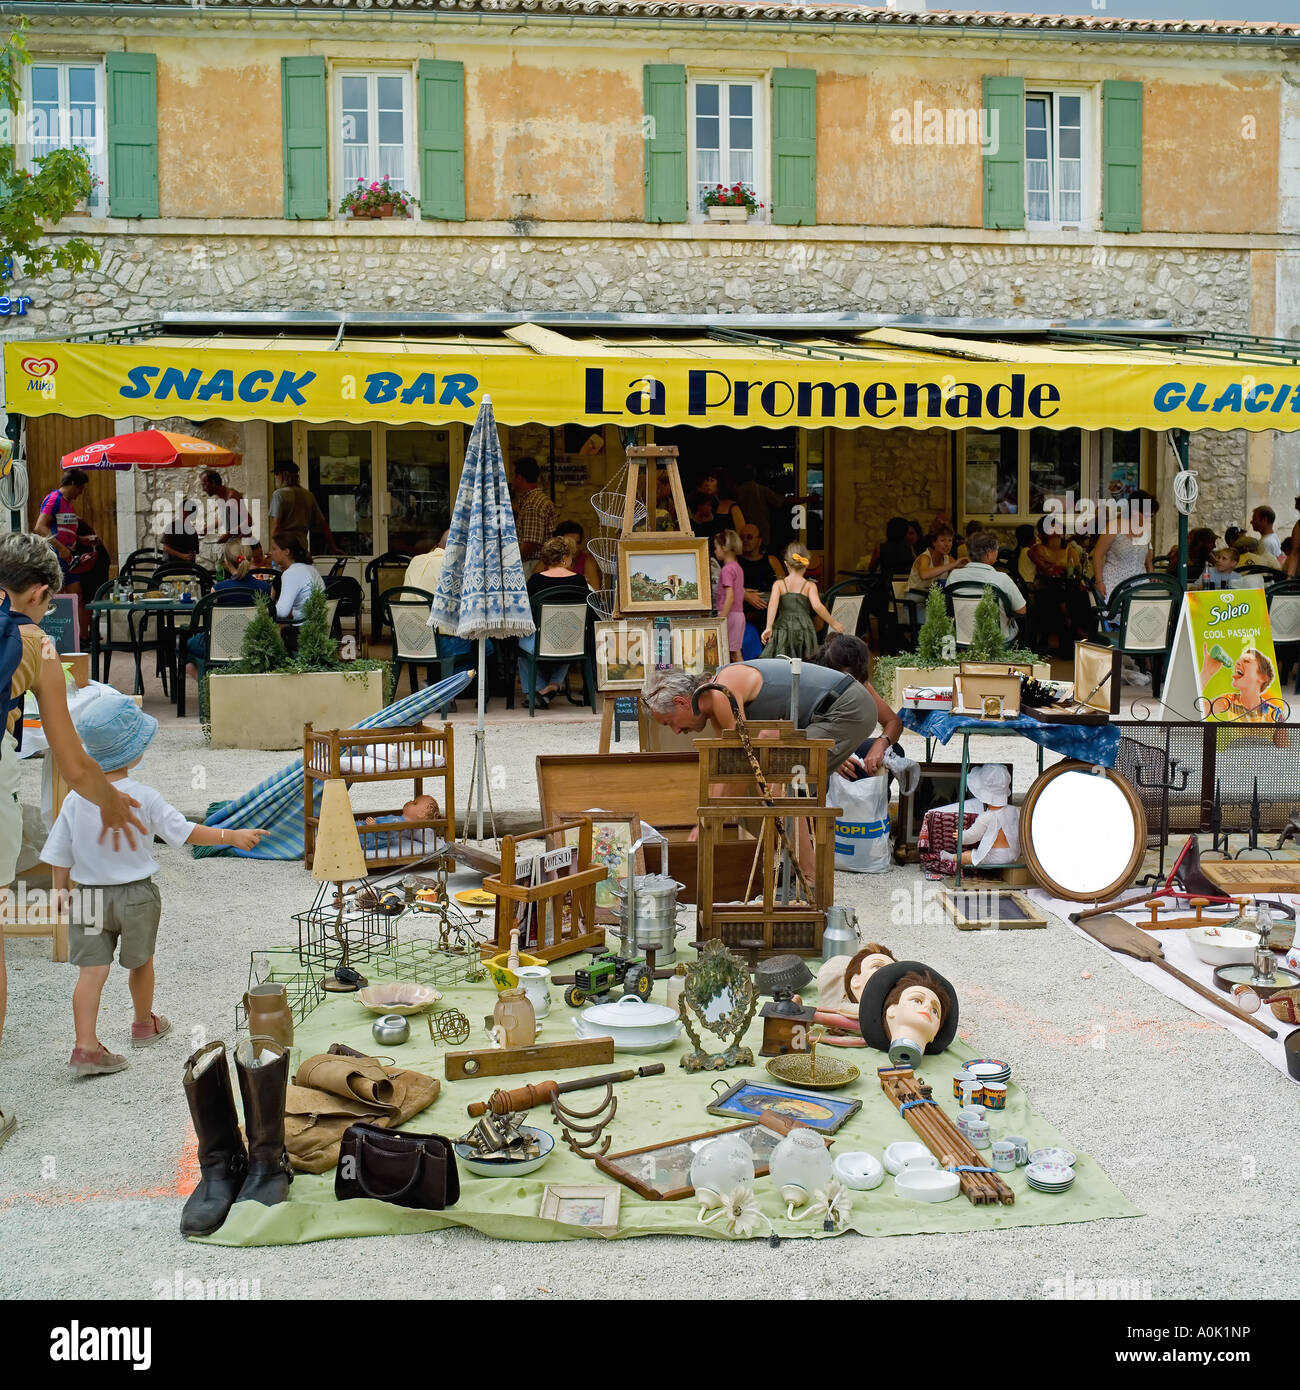 Annual flea market, stall display, snack bar La Promenade, restaurant ...